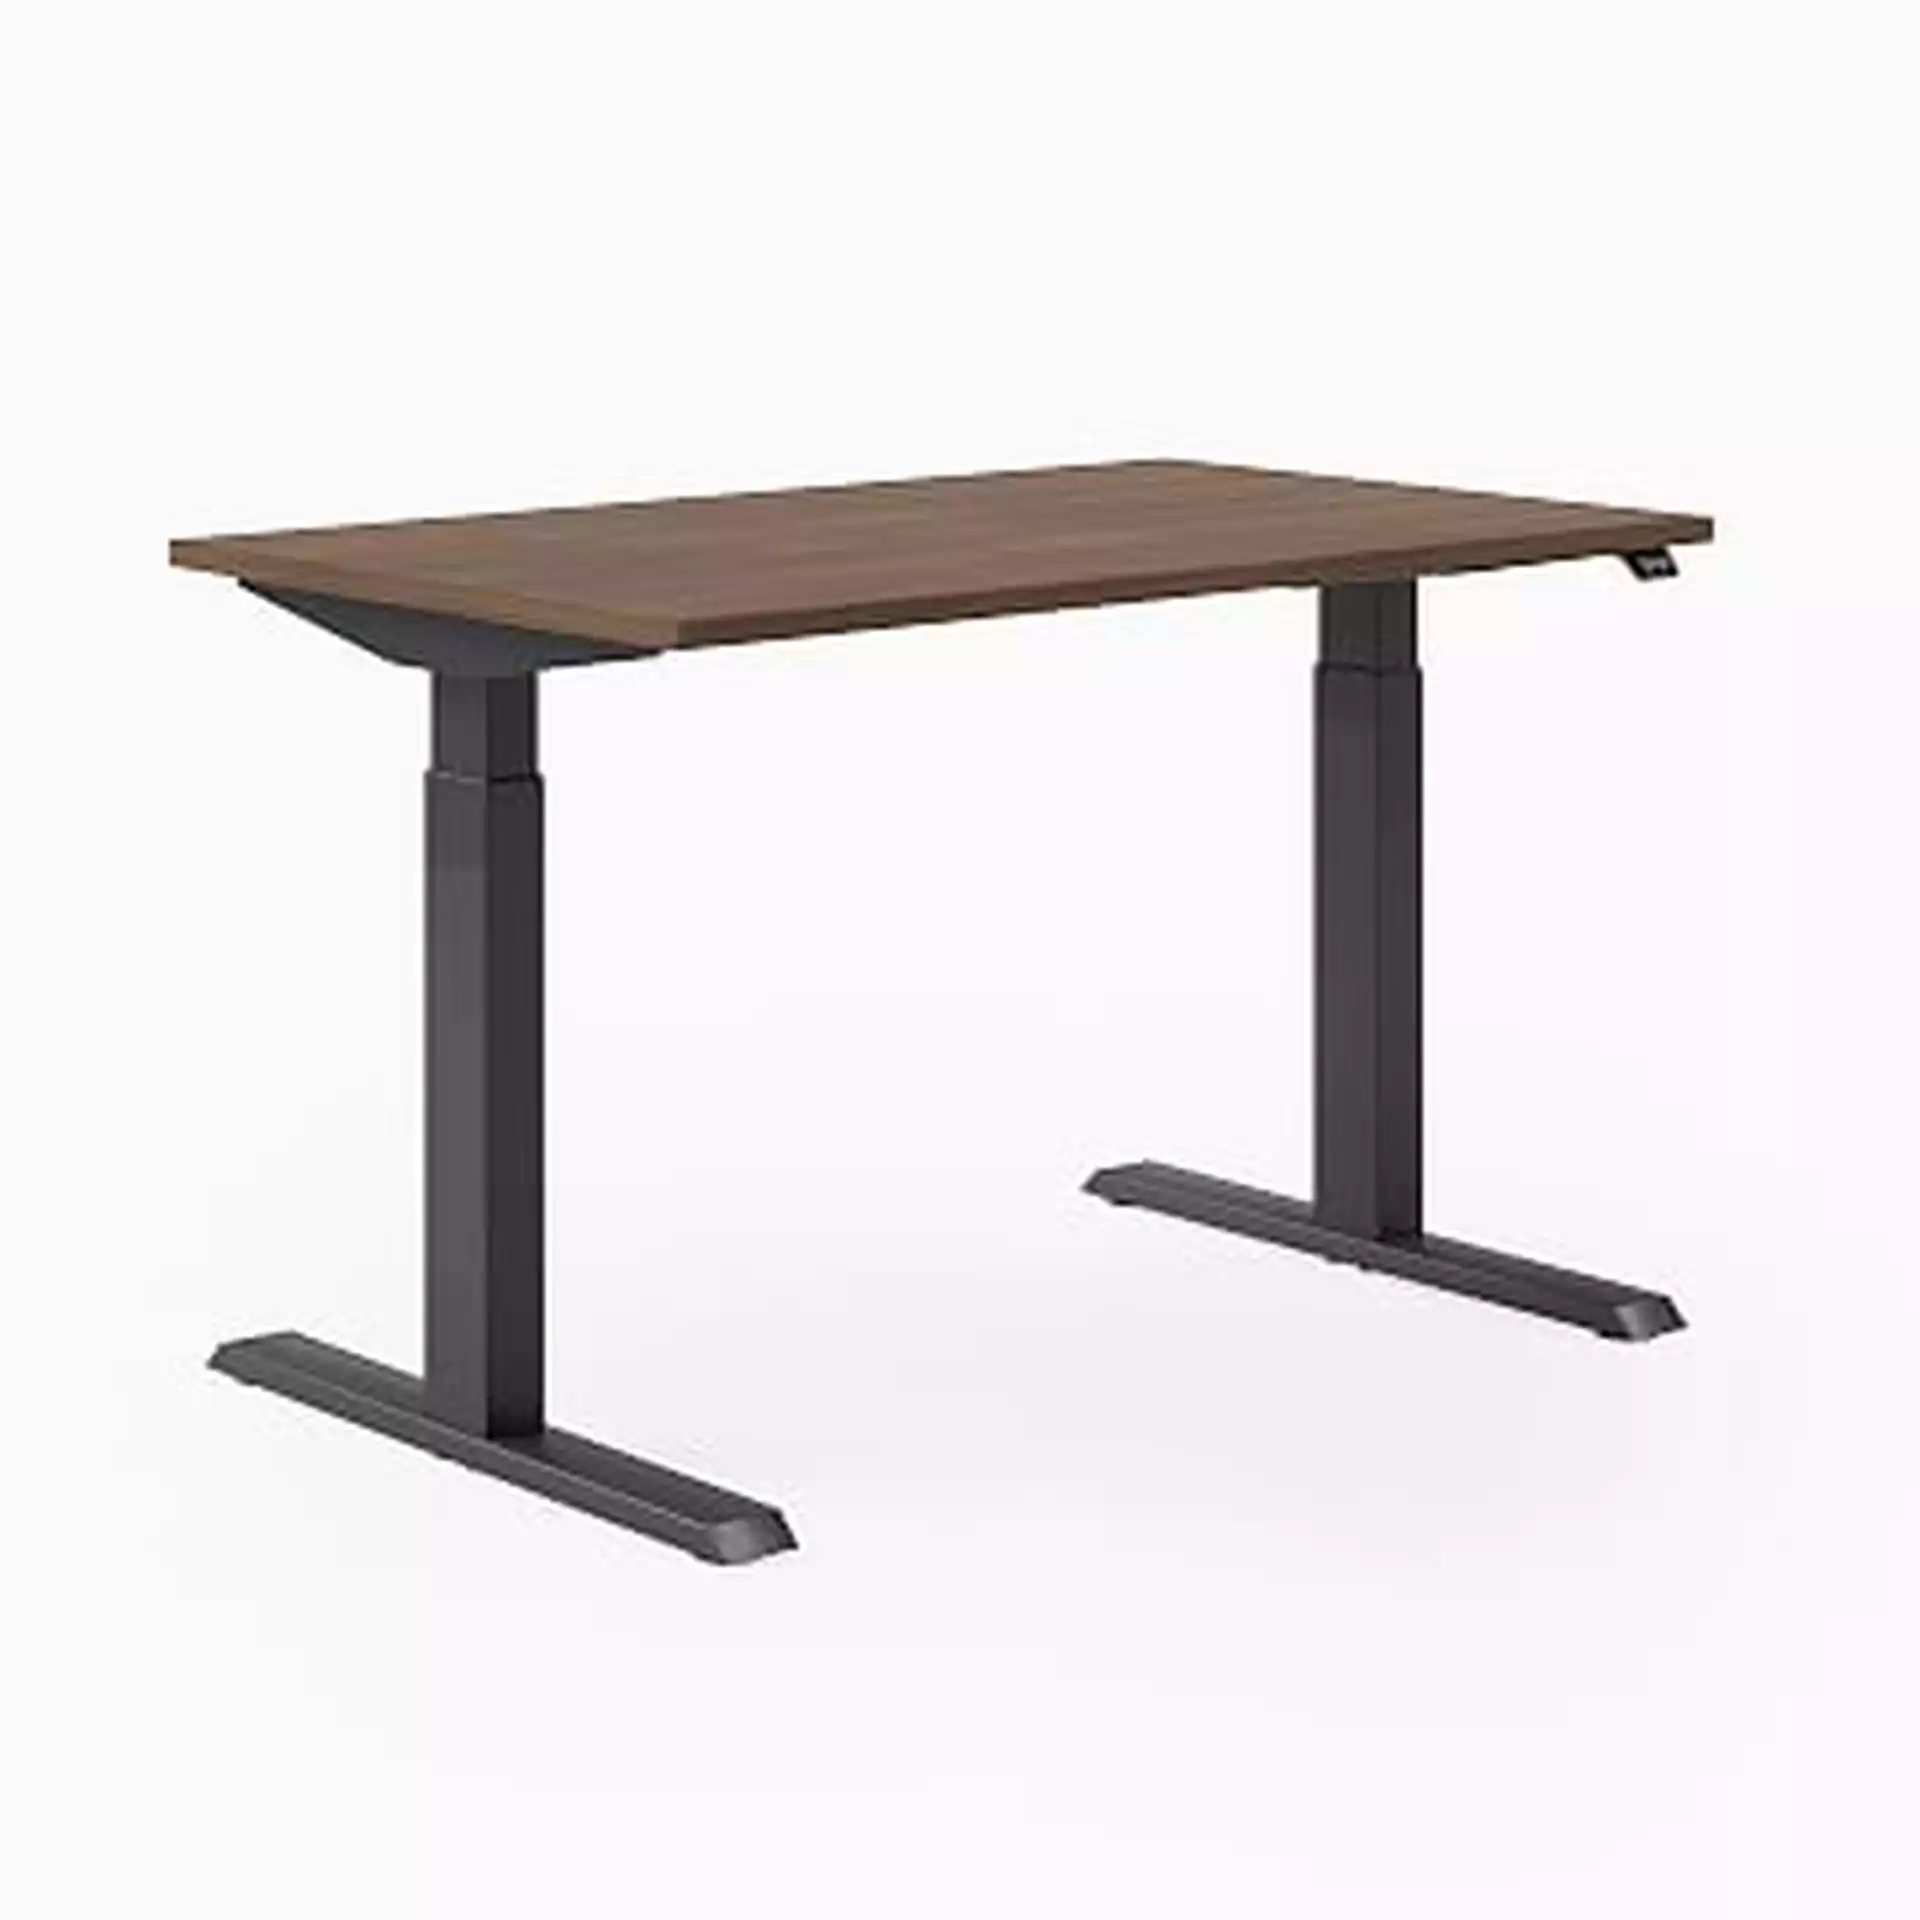 Steelcase Migration SE Height-Adjustable Desk, 23"x58", Virginia Walnut, Merle, Mitered Edge Foot